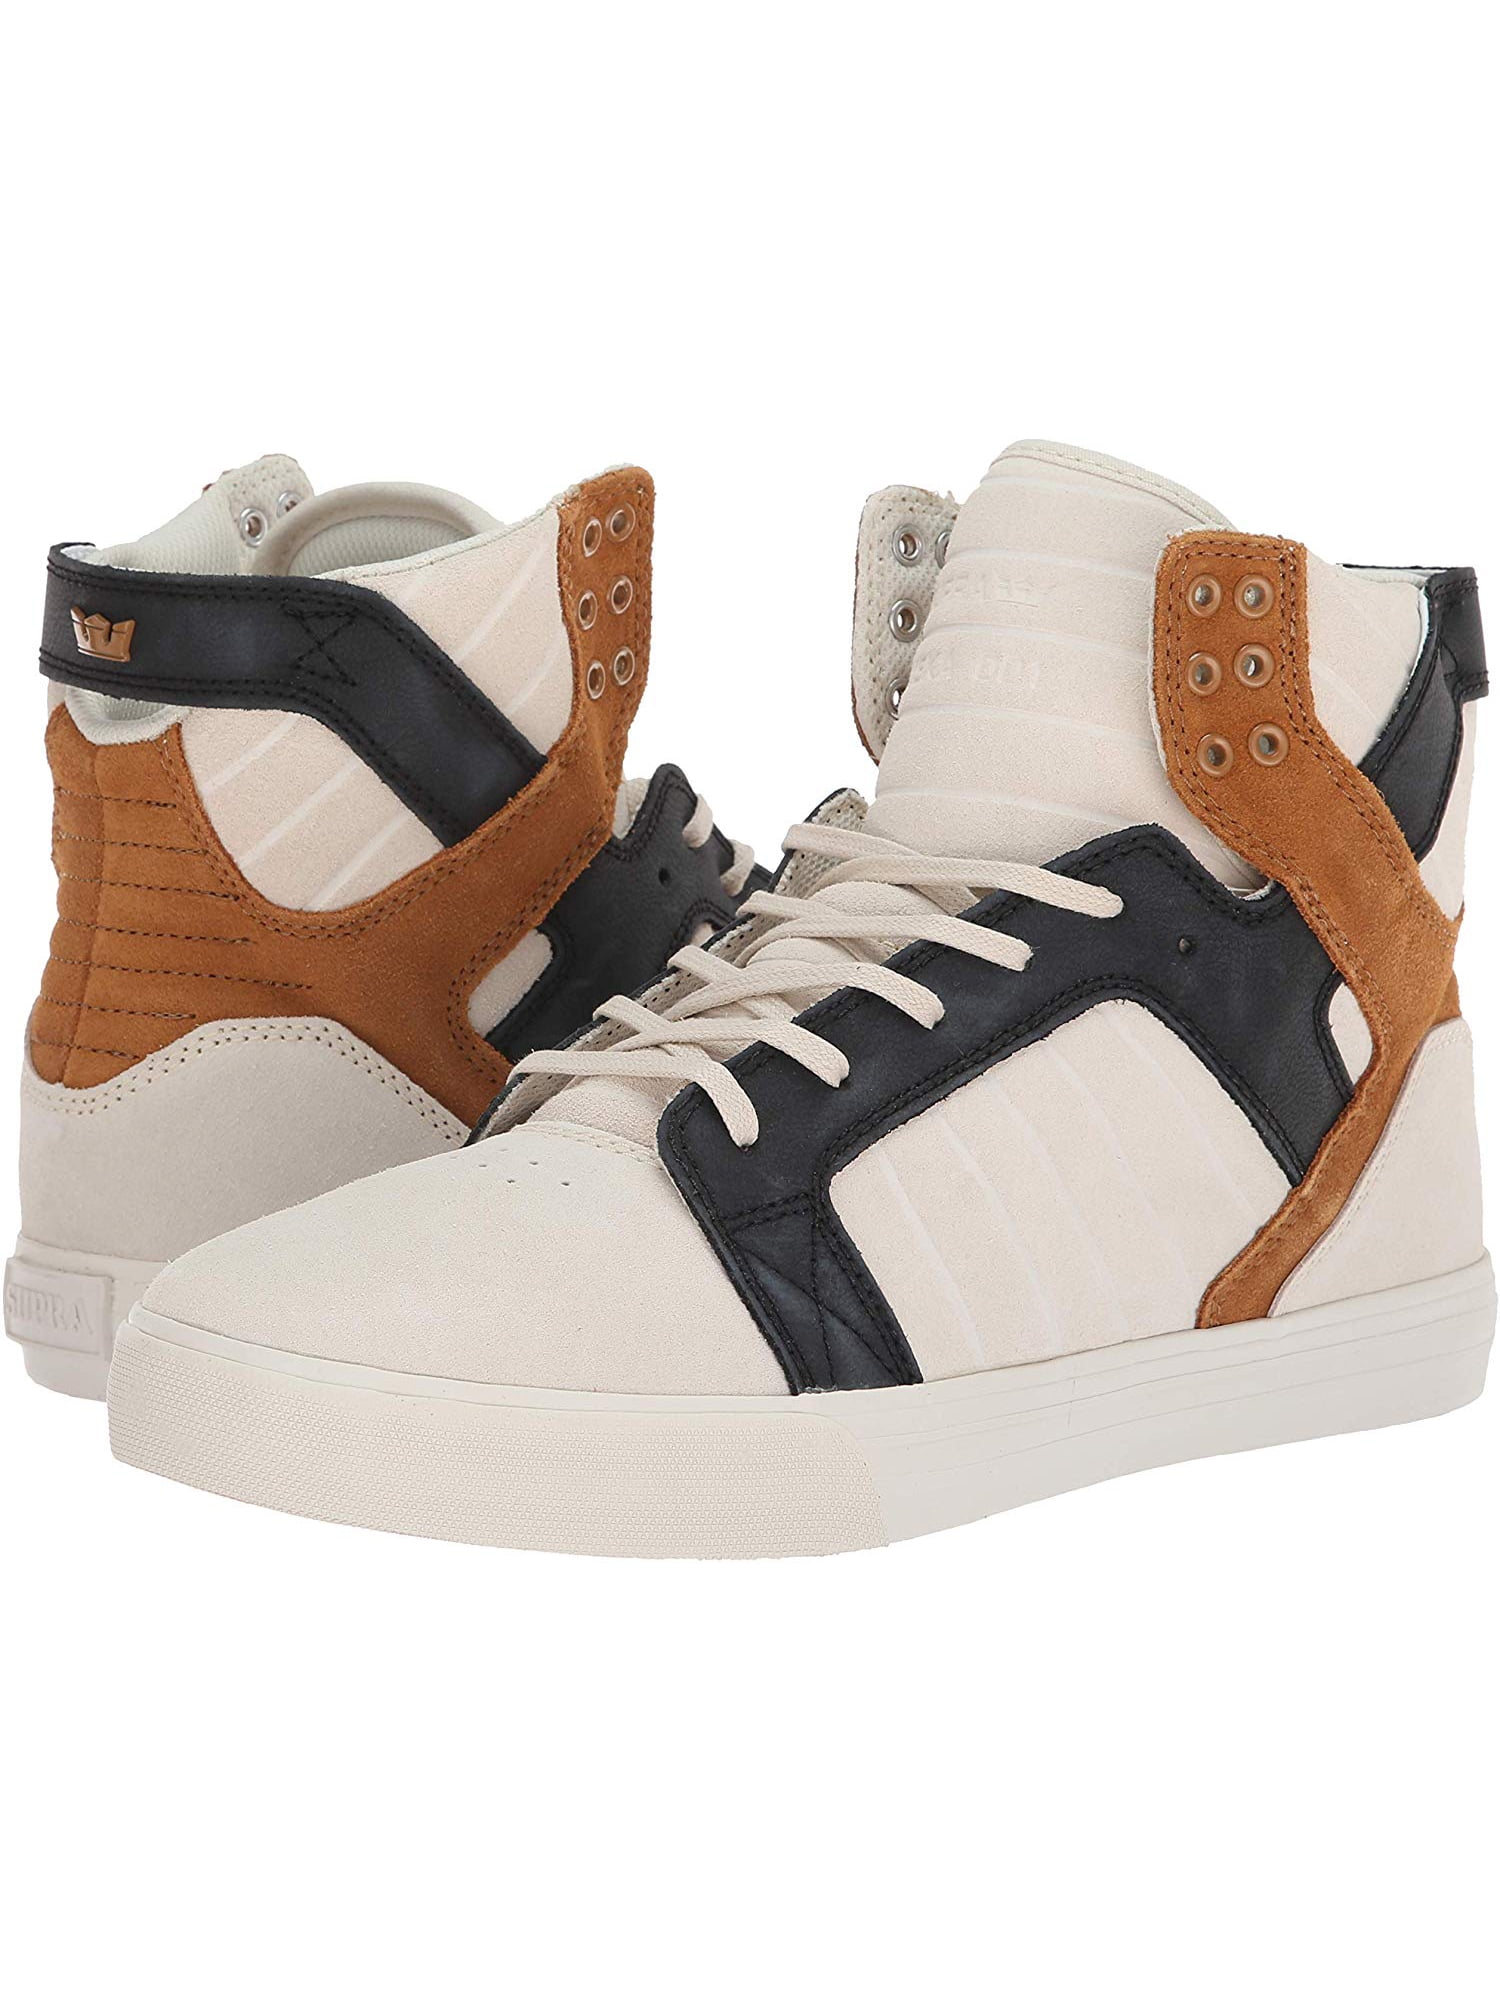 Handvol Haiku Wanorde Supra Skytop Mens Fashion Leather Sneakers High Top Suede Skate Shoes Bone  - Walmart.com